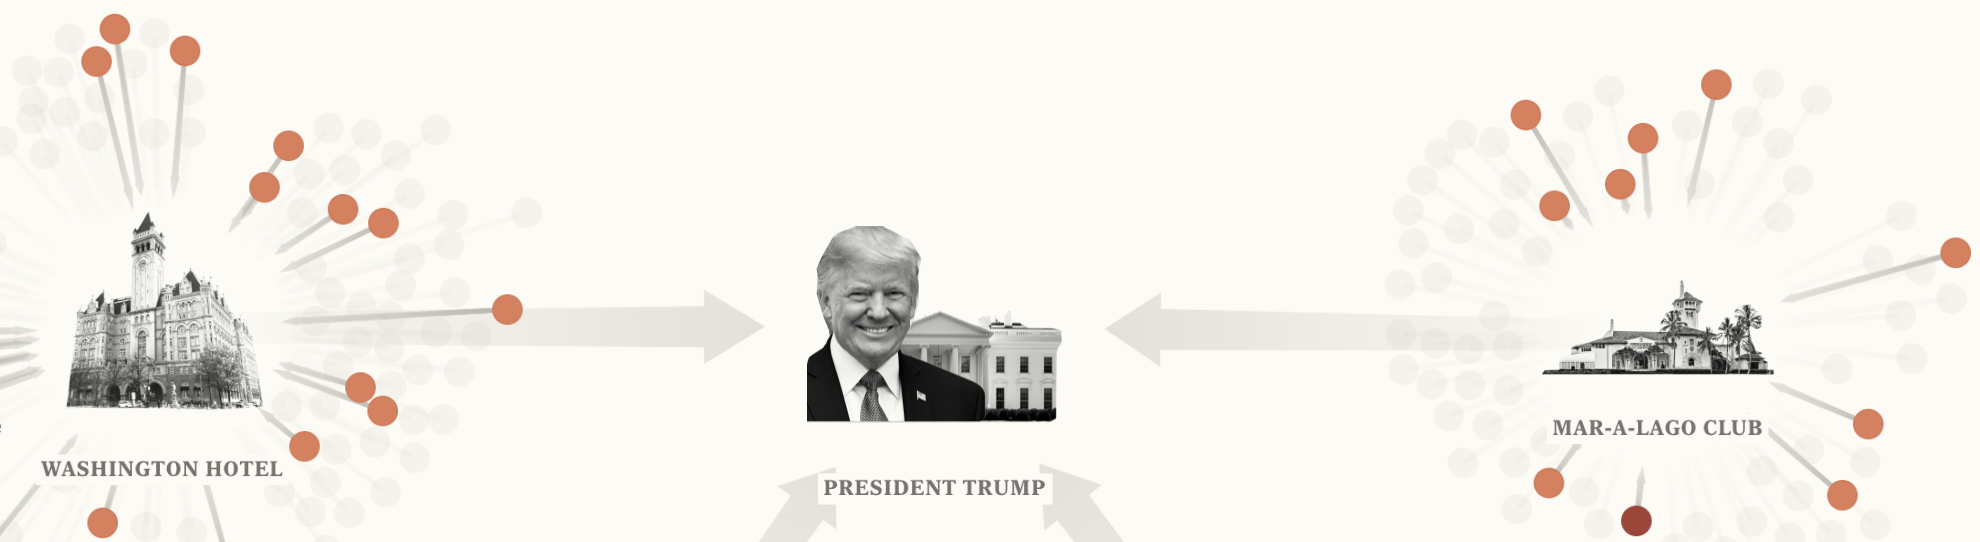 Graphic via the NY Times